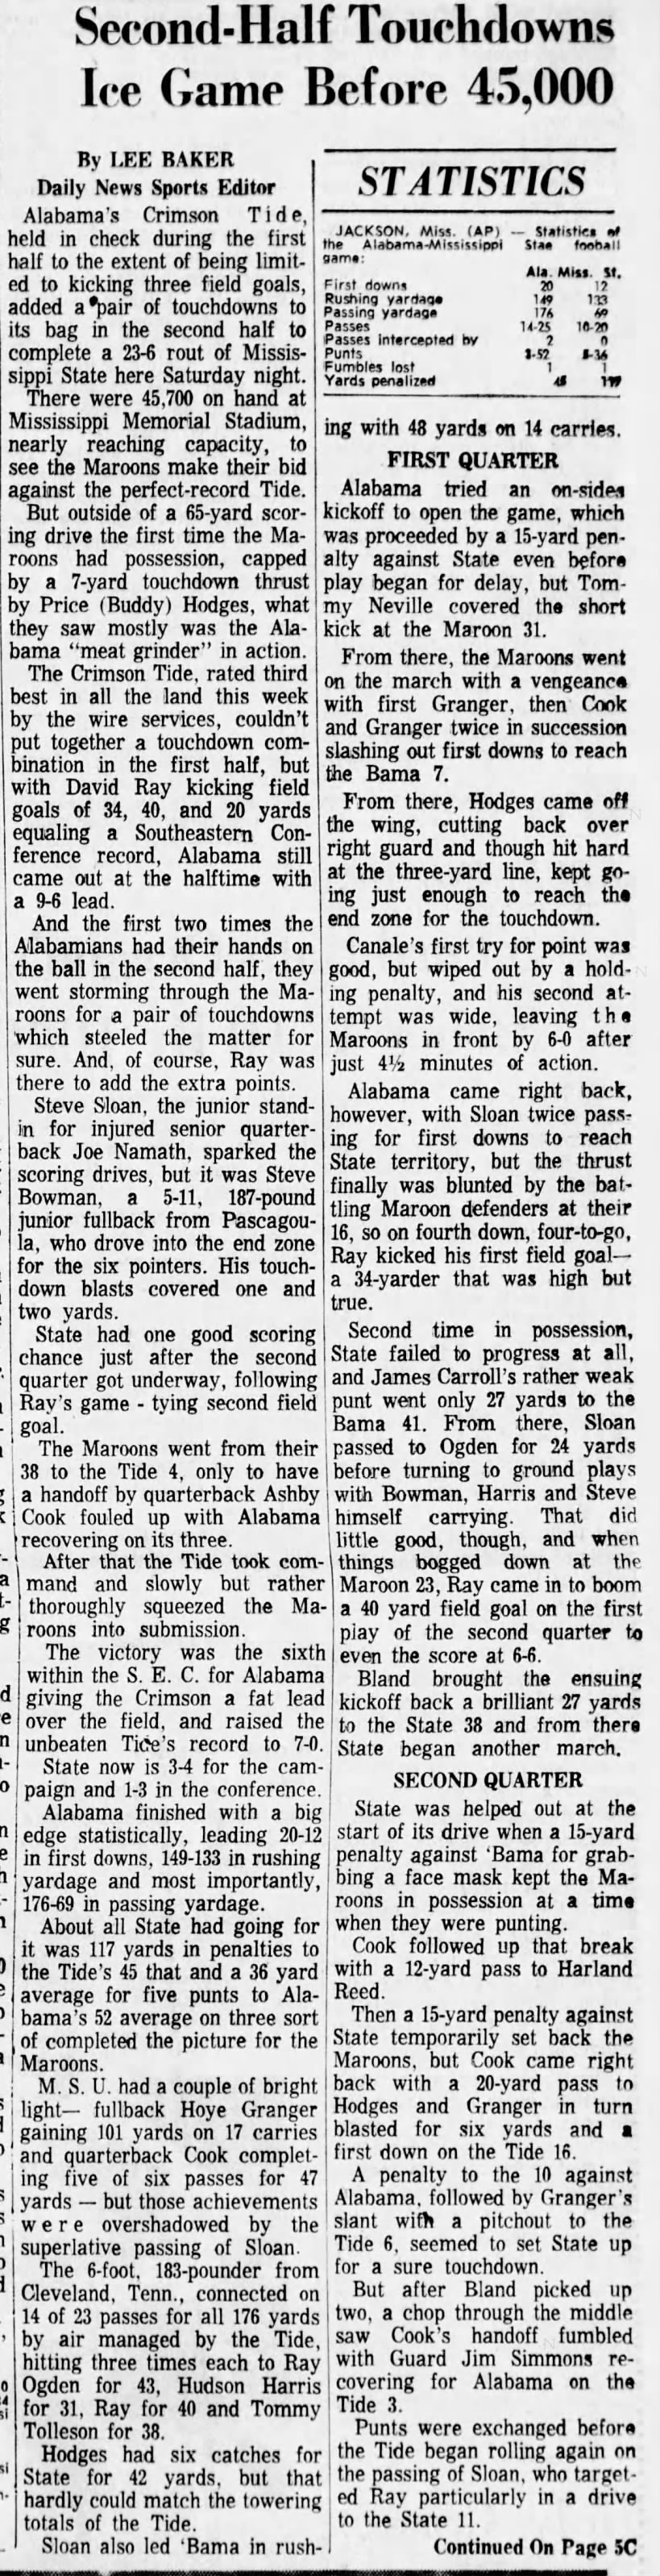 Alabama surge defeats Miss. State U., 23 to 6